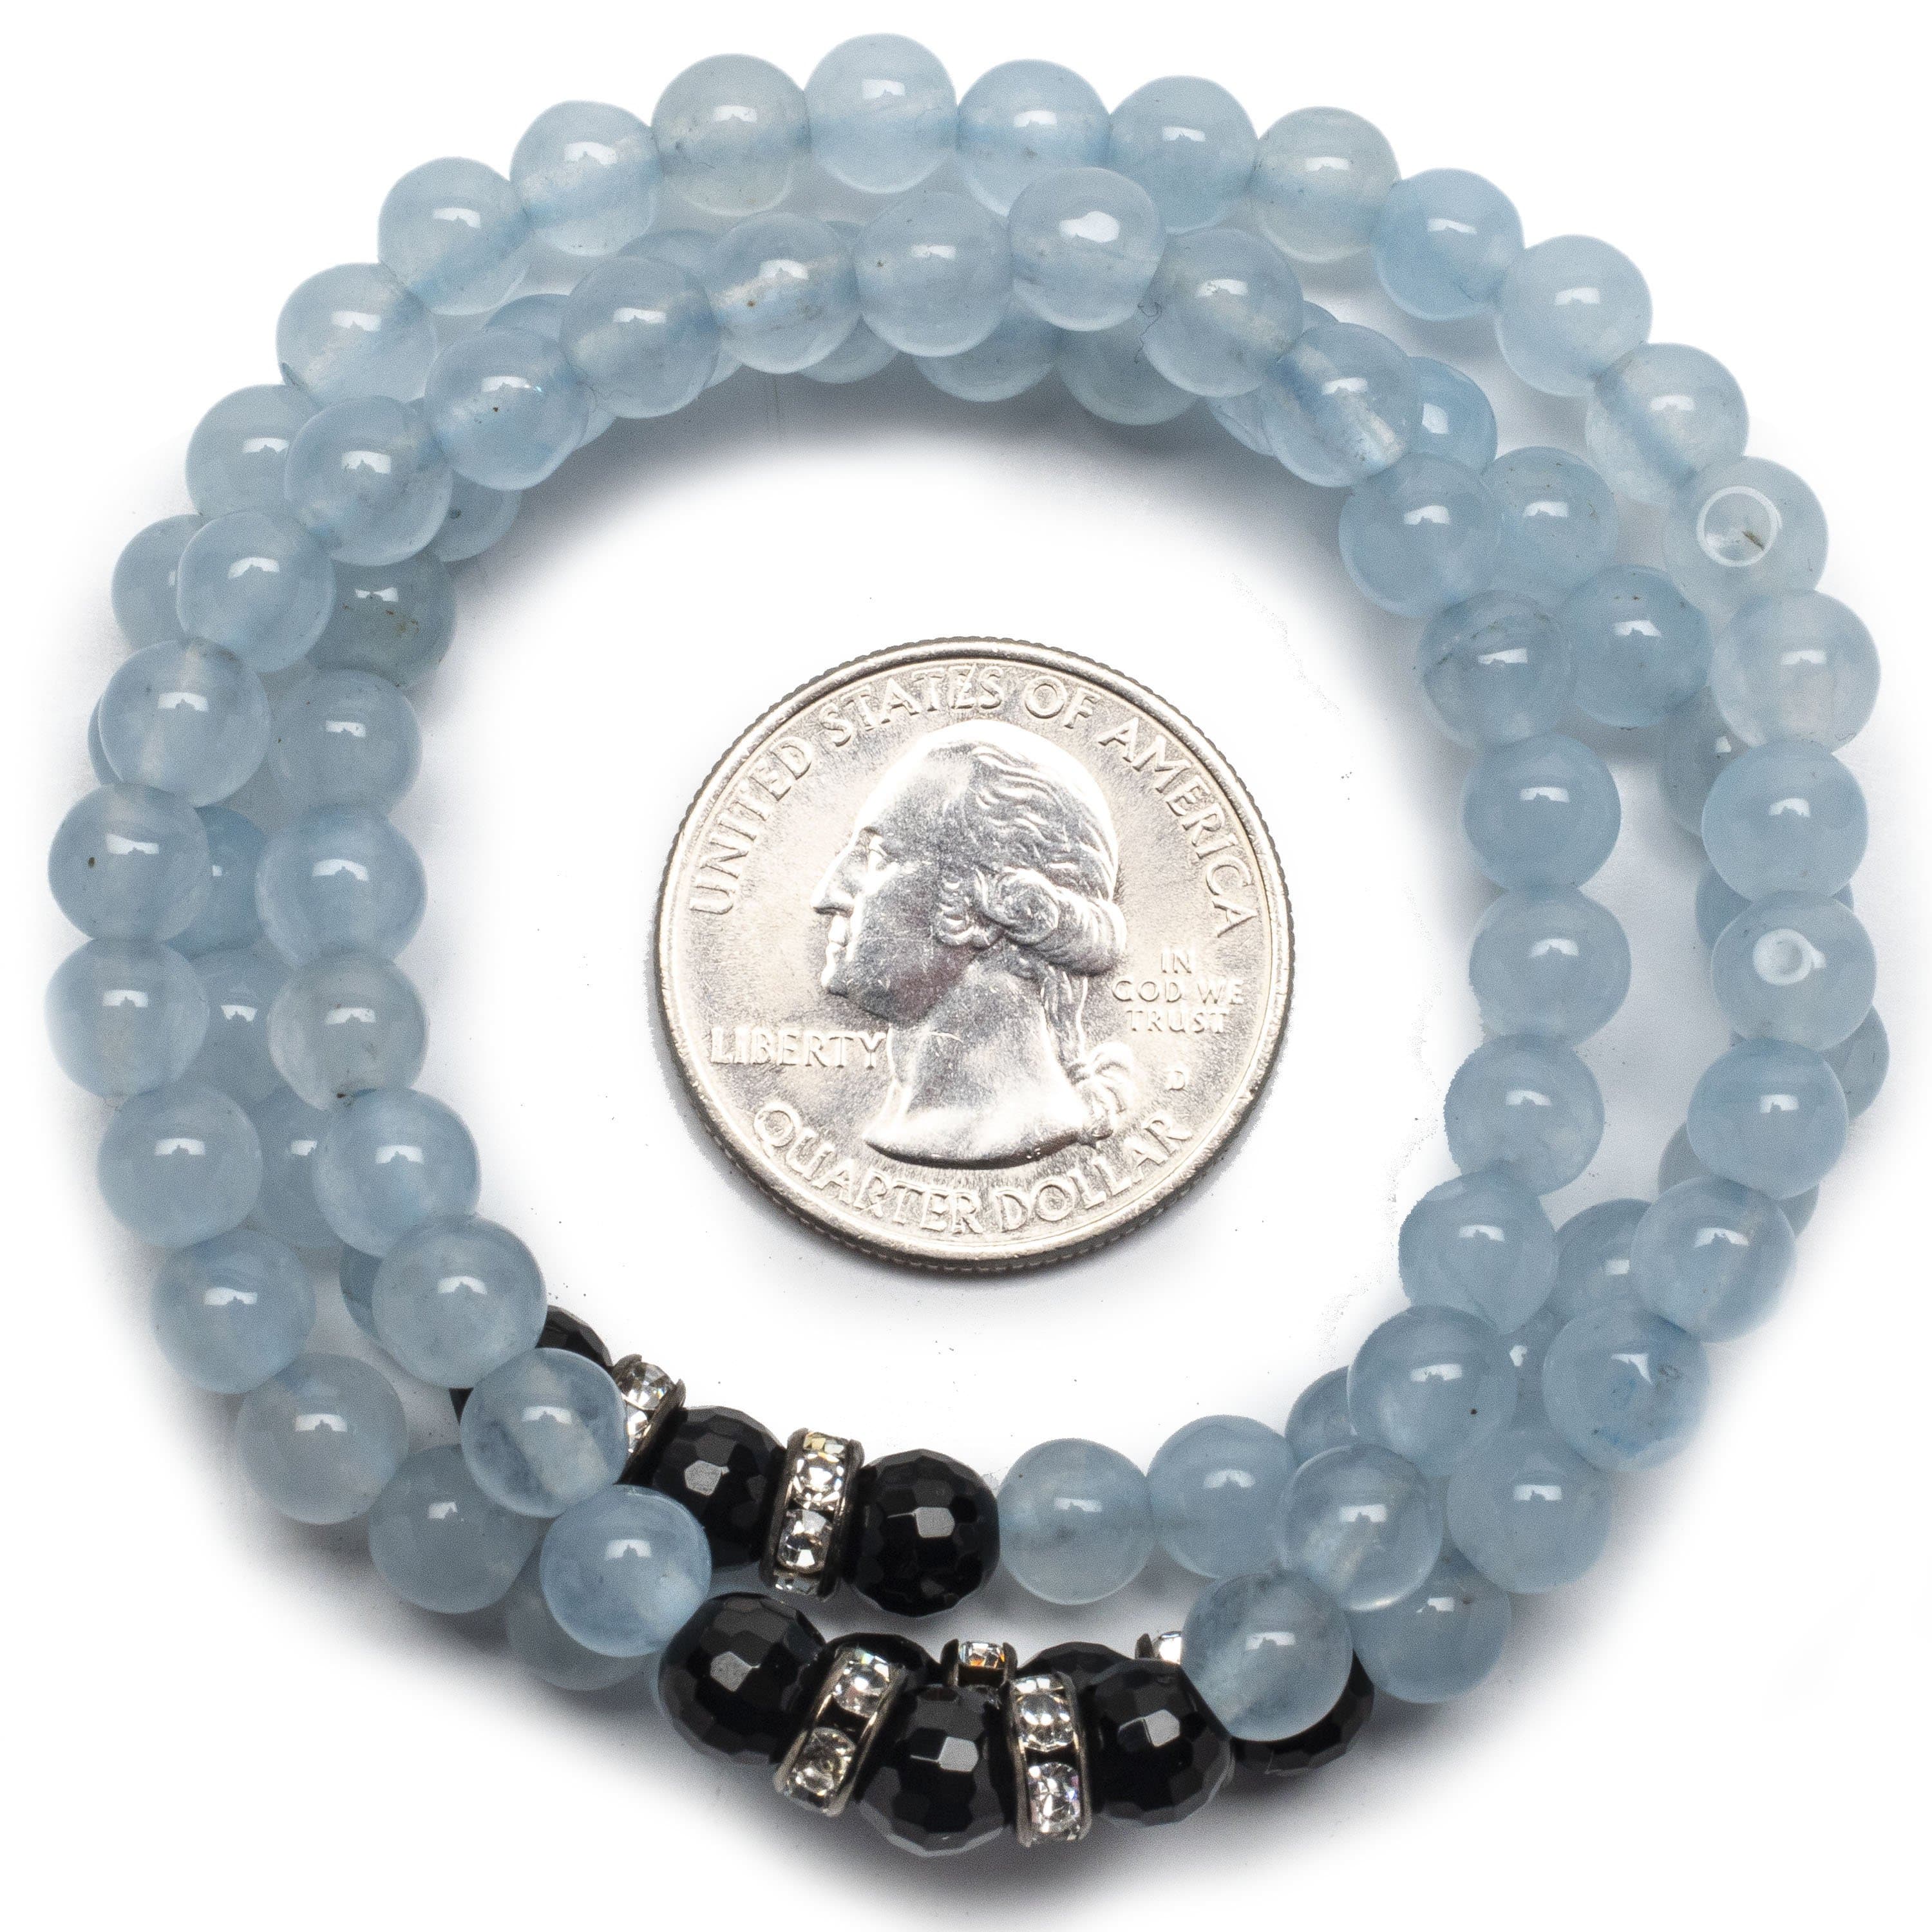 Kalifano Gemstone Bracelets Light Blue Agate Beads with Black Agate and Silver Crystal Accent Beads Triple Wrap Elastic Gemstone Bracelet WHITE-BGI3-018